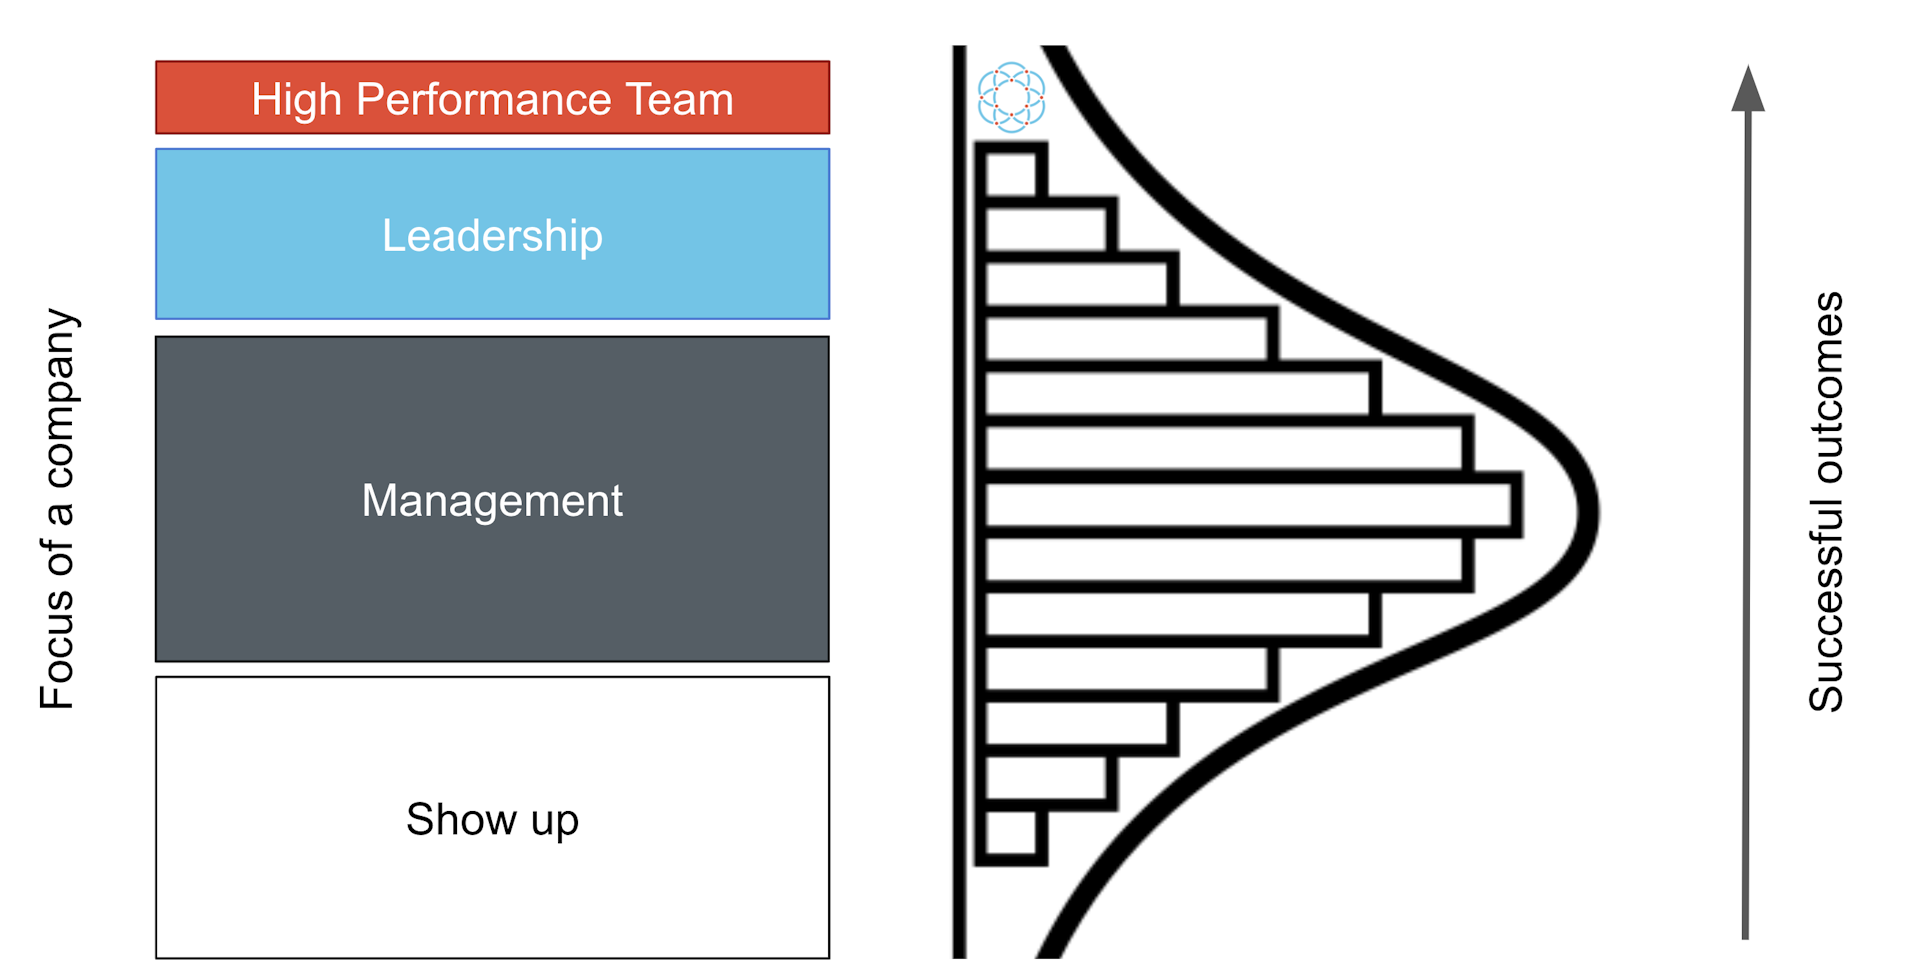 How we build Ockam as a High Performance Team